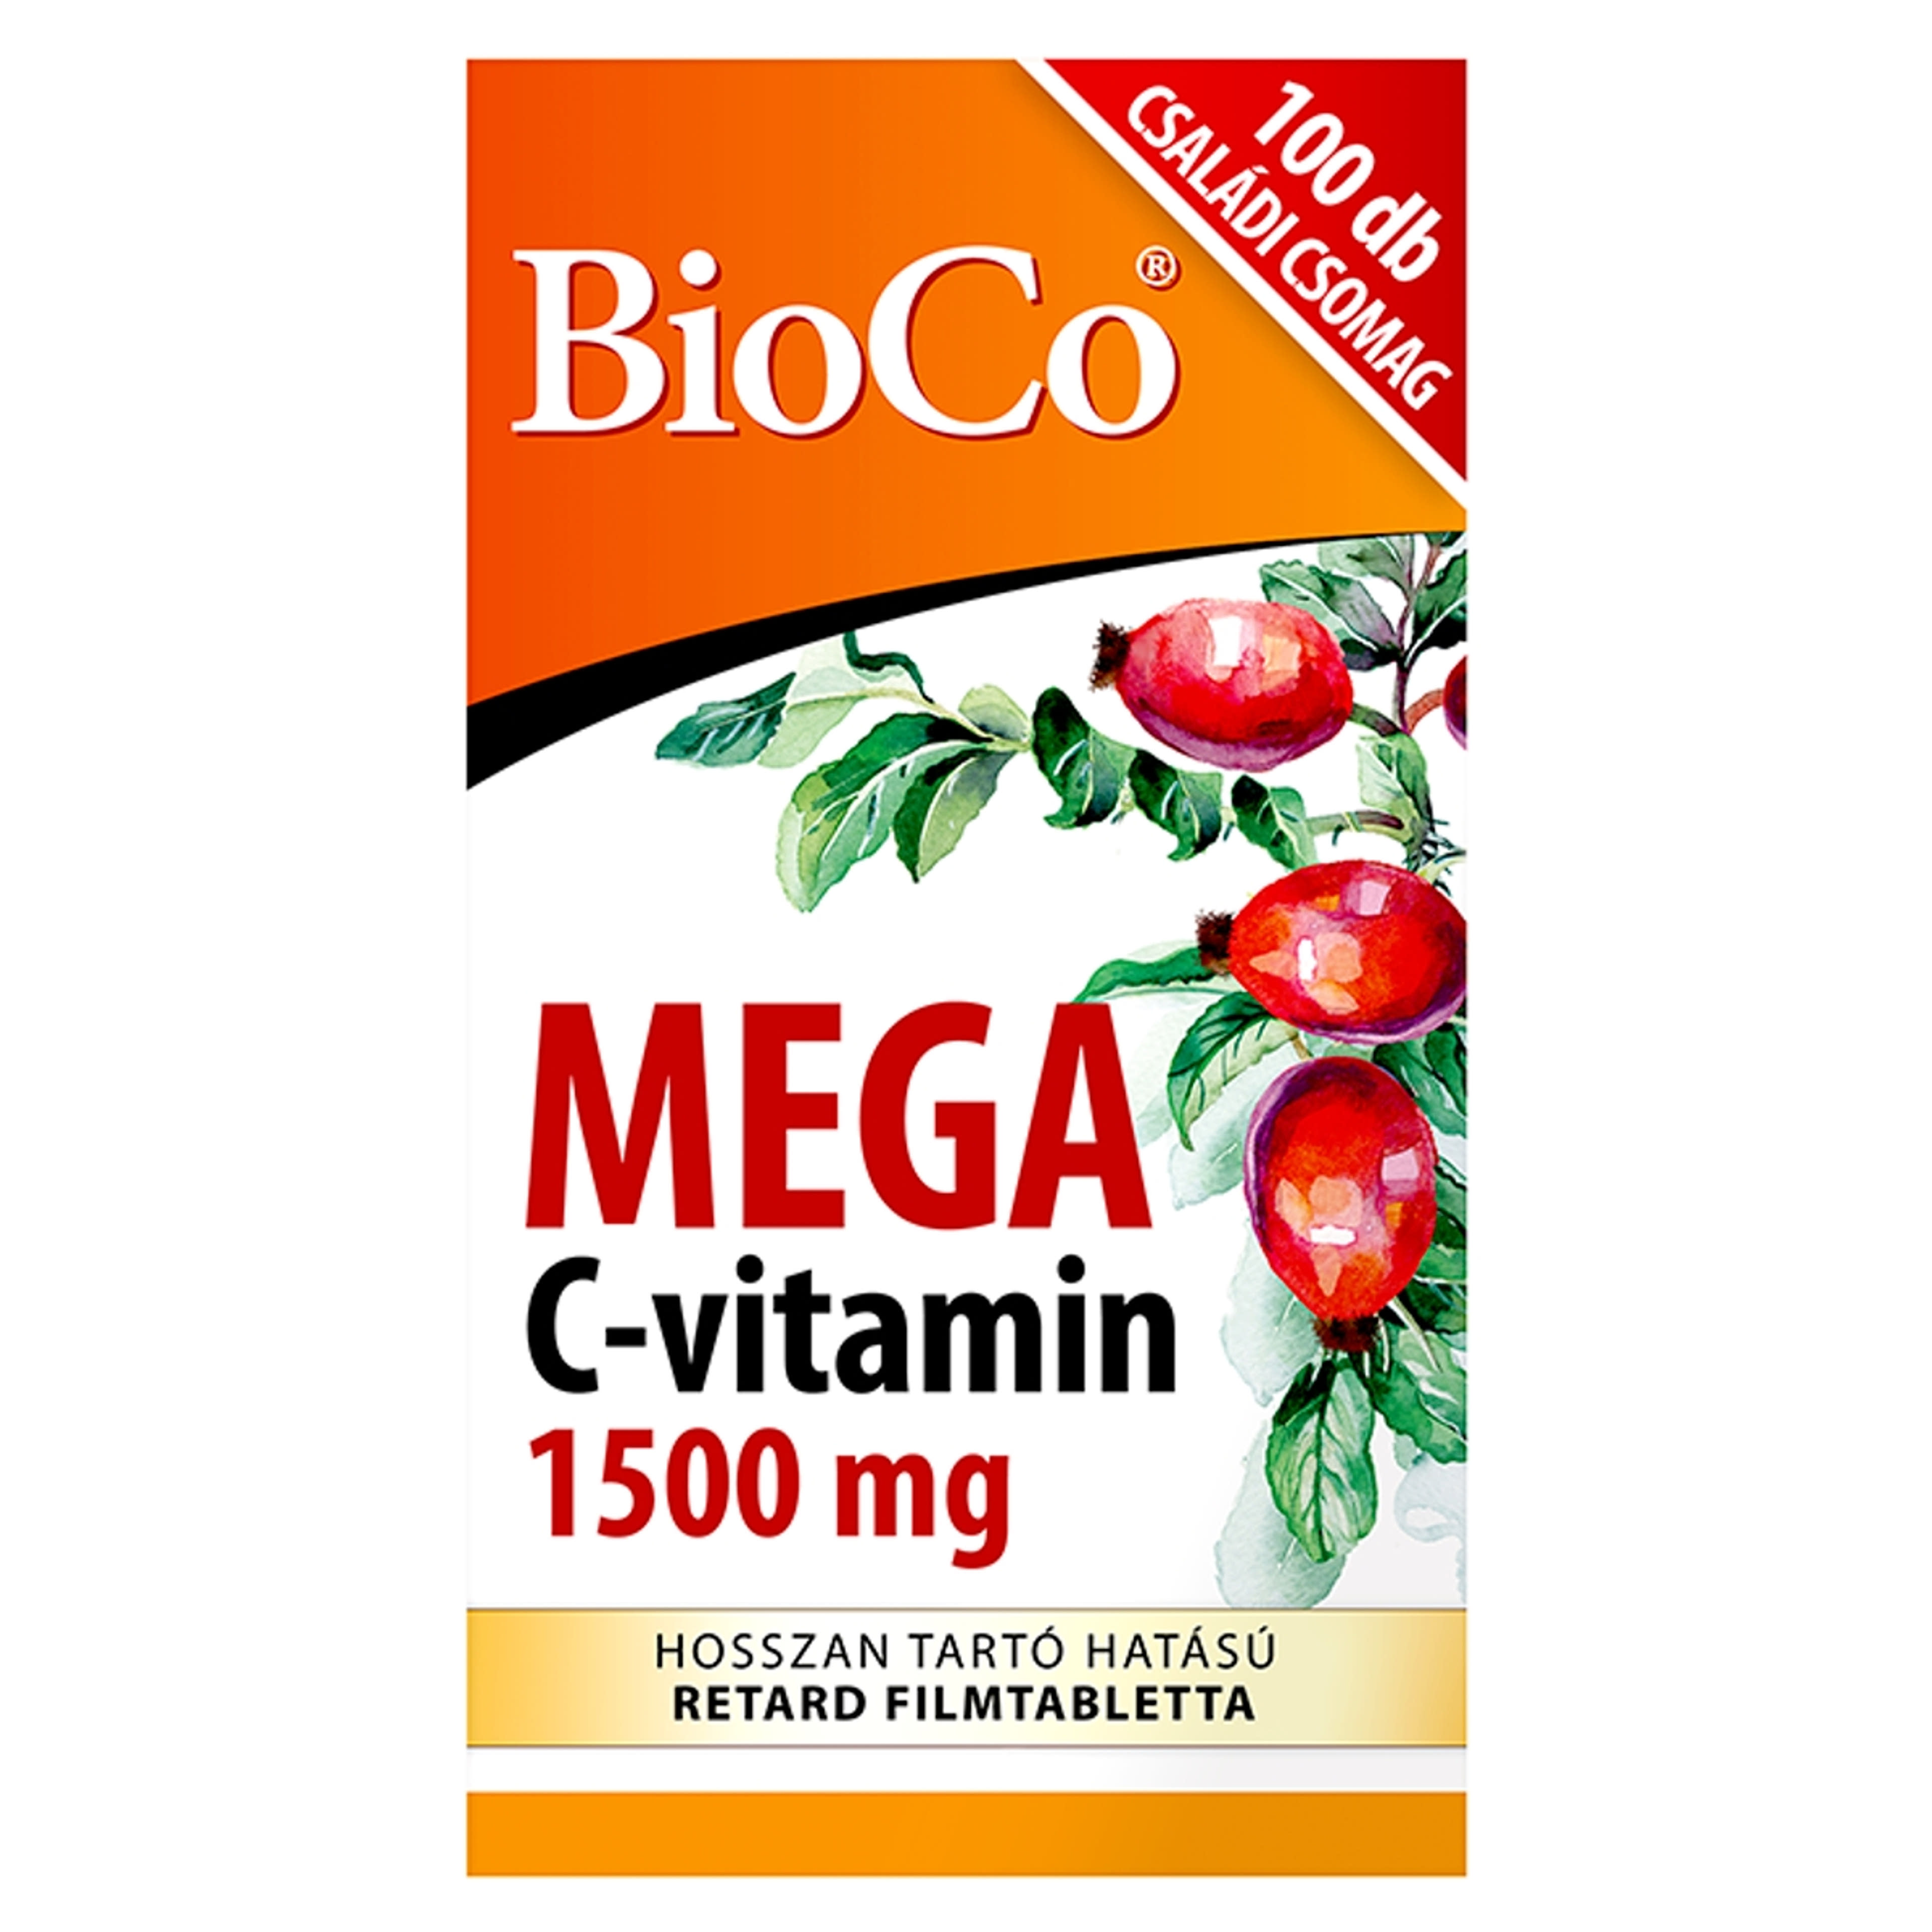 Bioco Mega C-vitamin étrendkiegészítő tabletta - 100 db